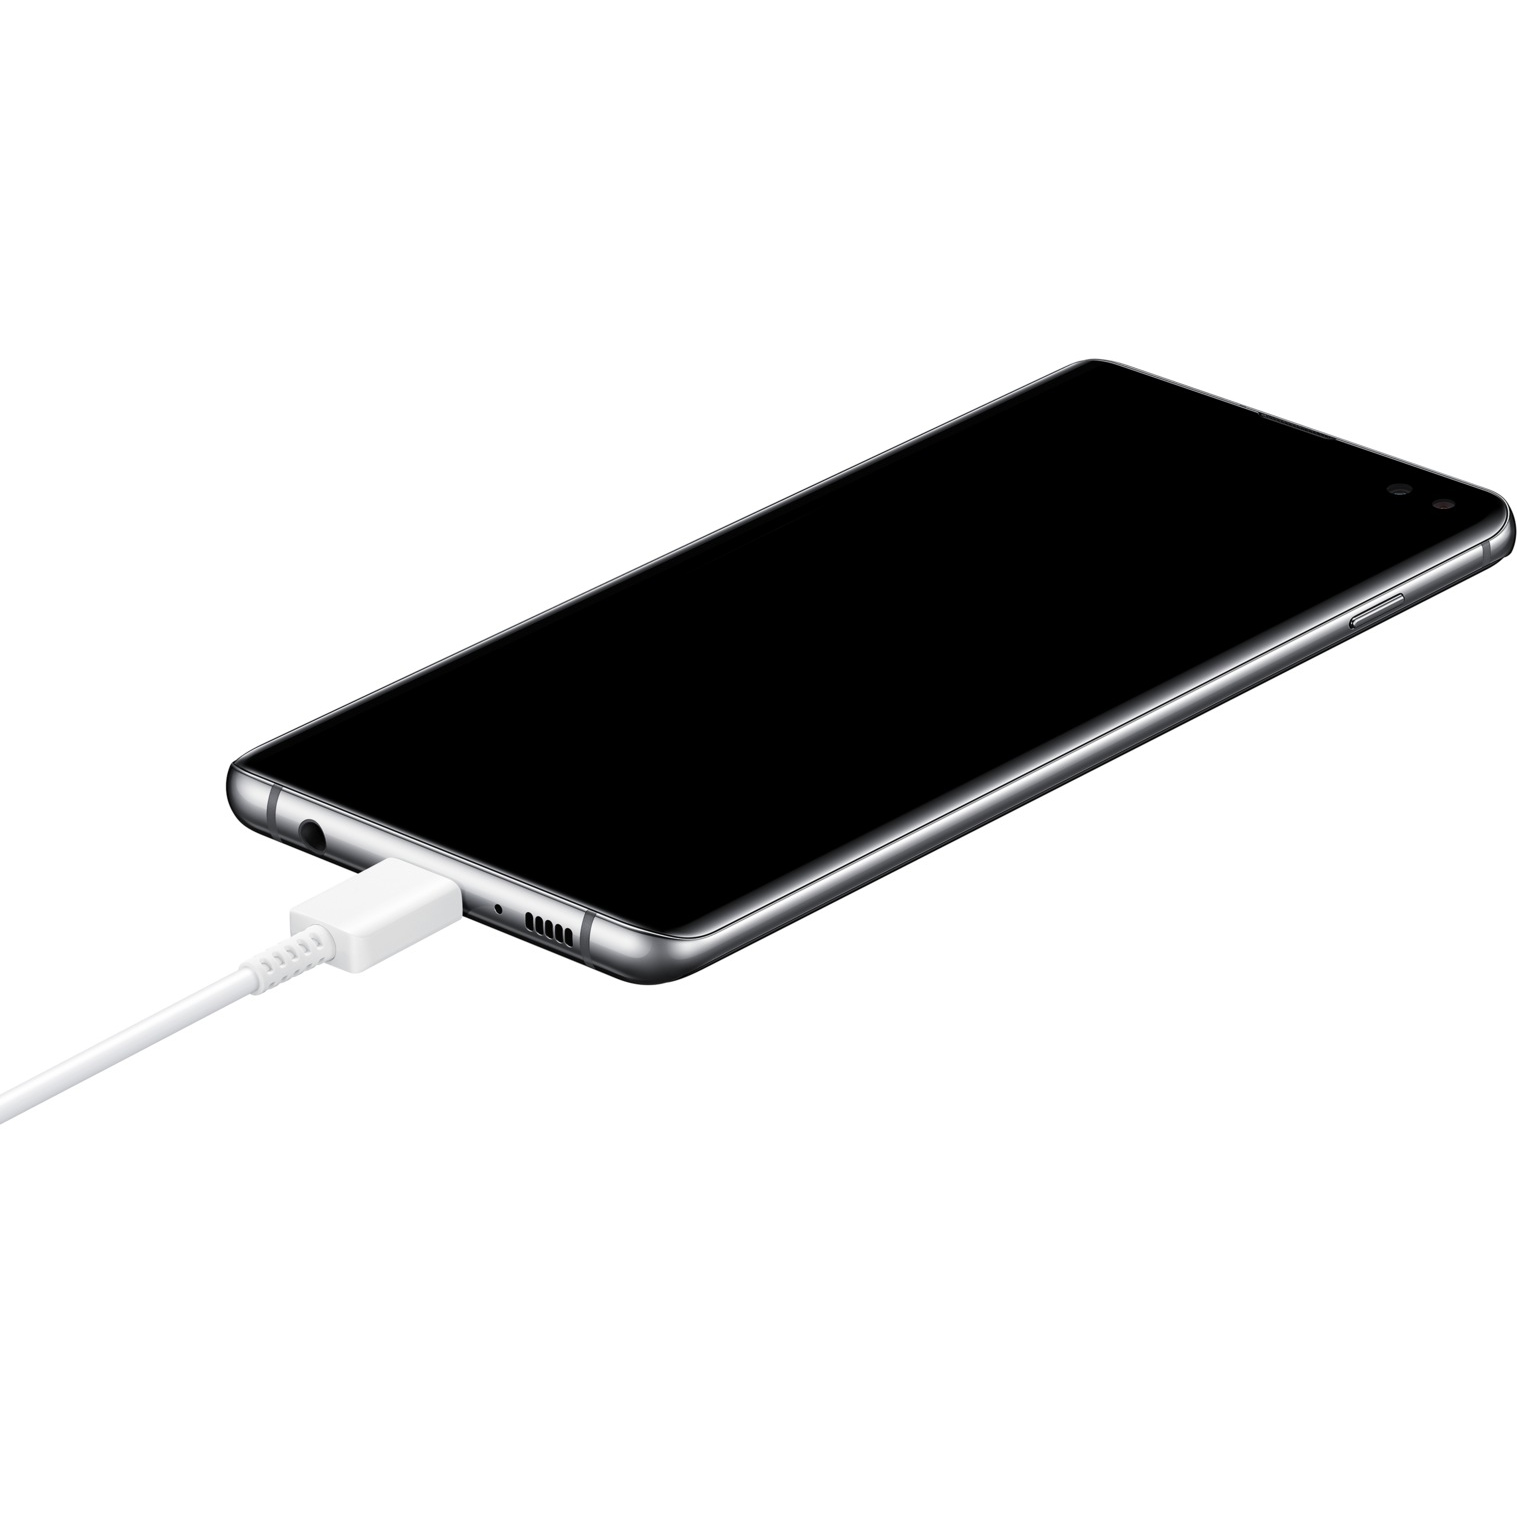 Сетевое зарядное устройство Samsung USB Type-C EP-TA800XWEGRU White, цвет белый - фото 6